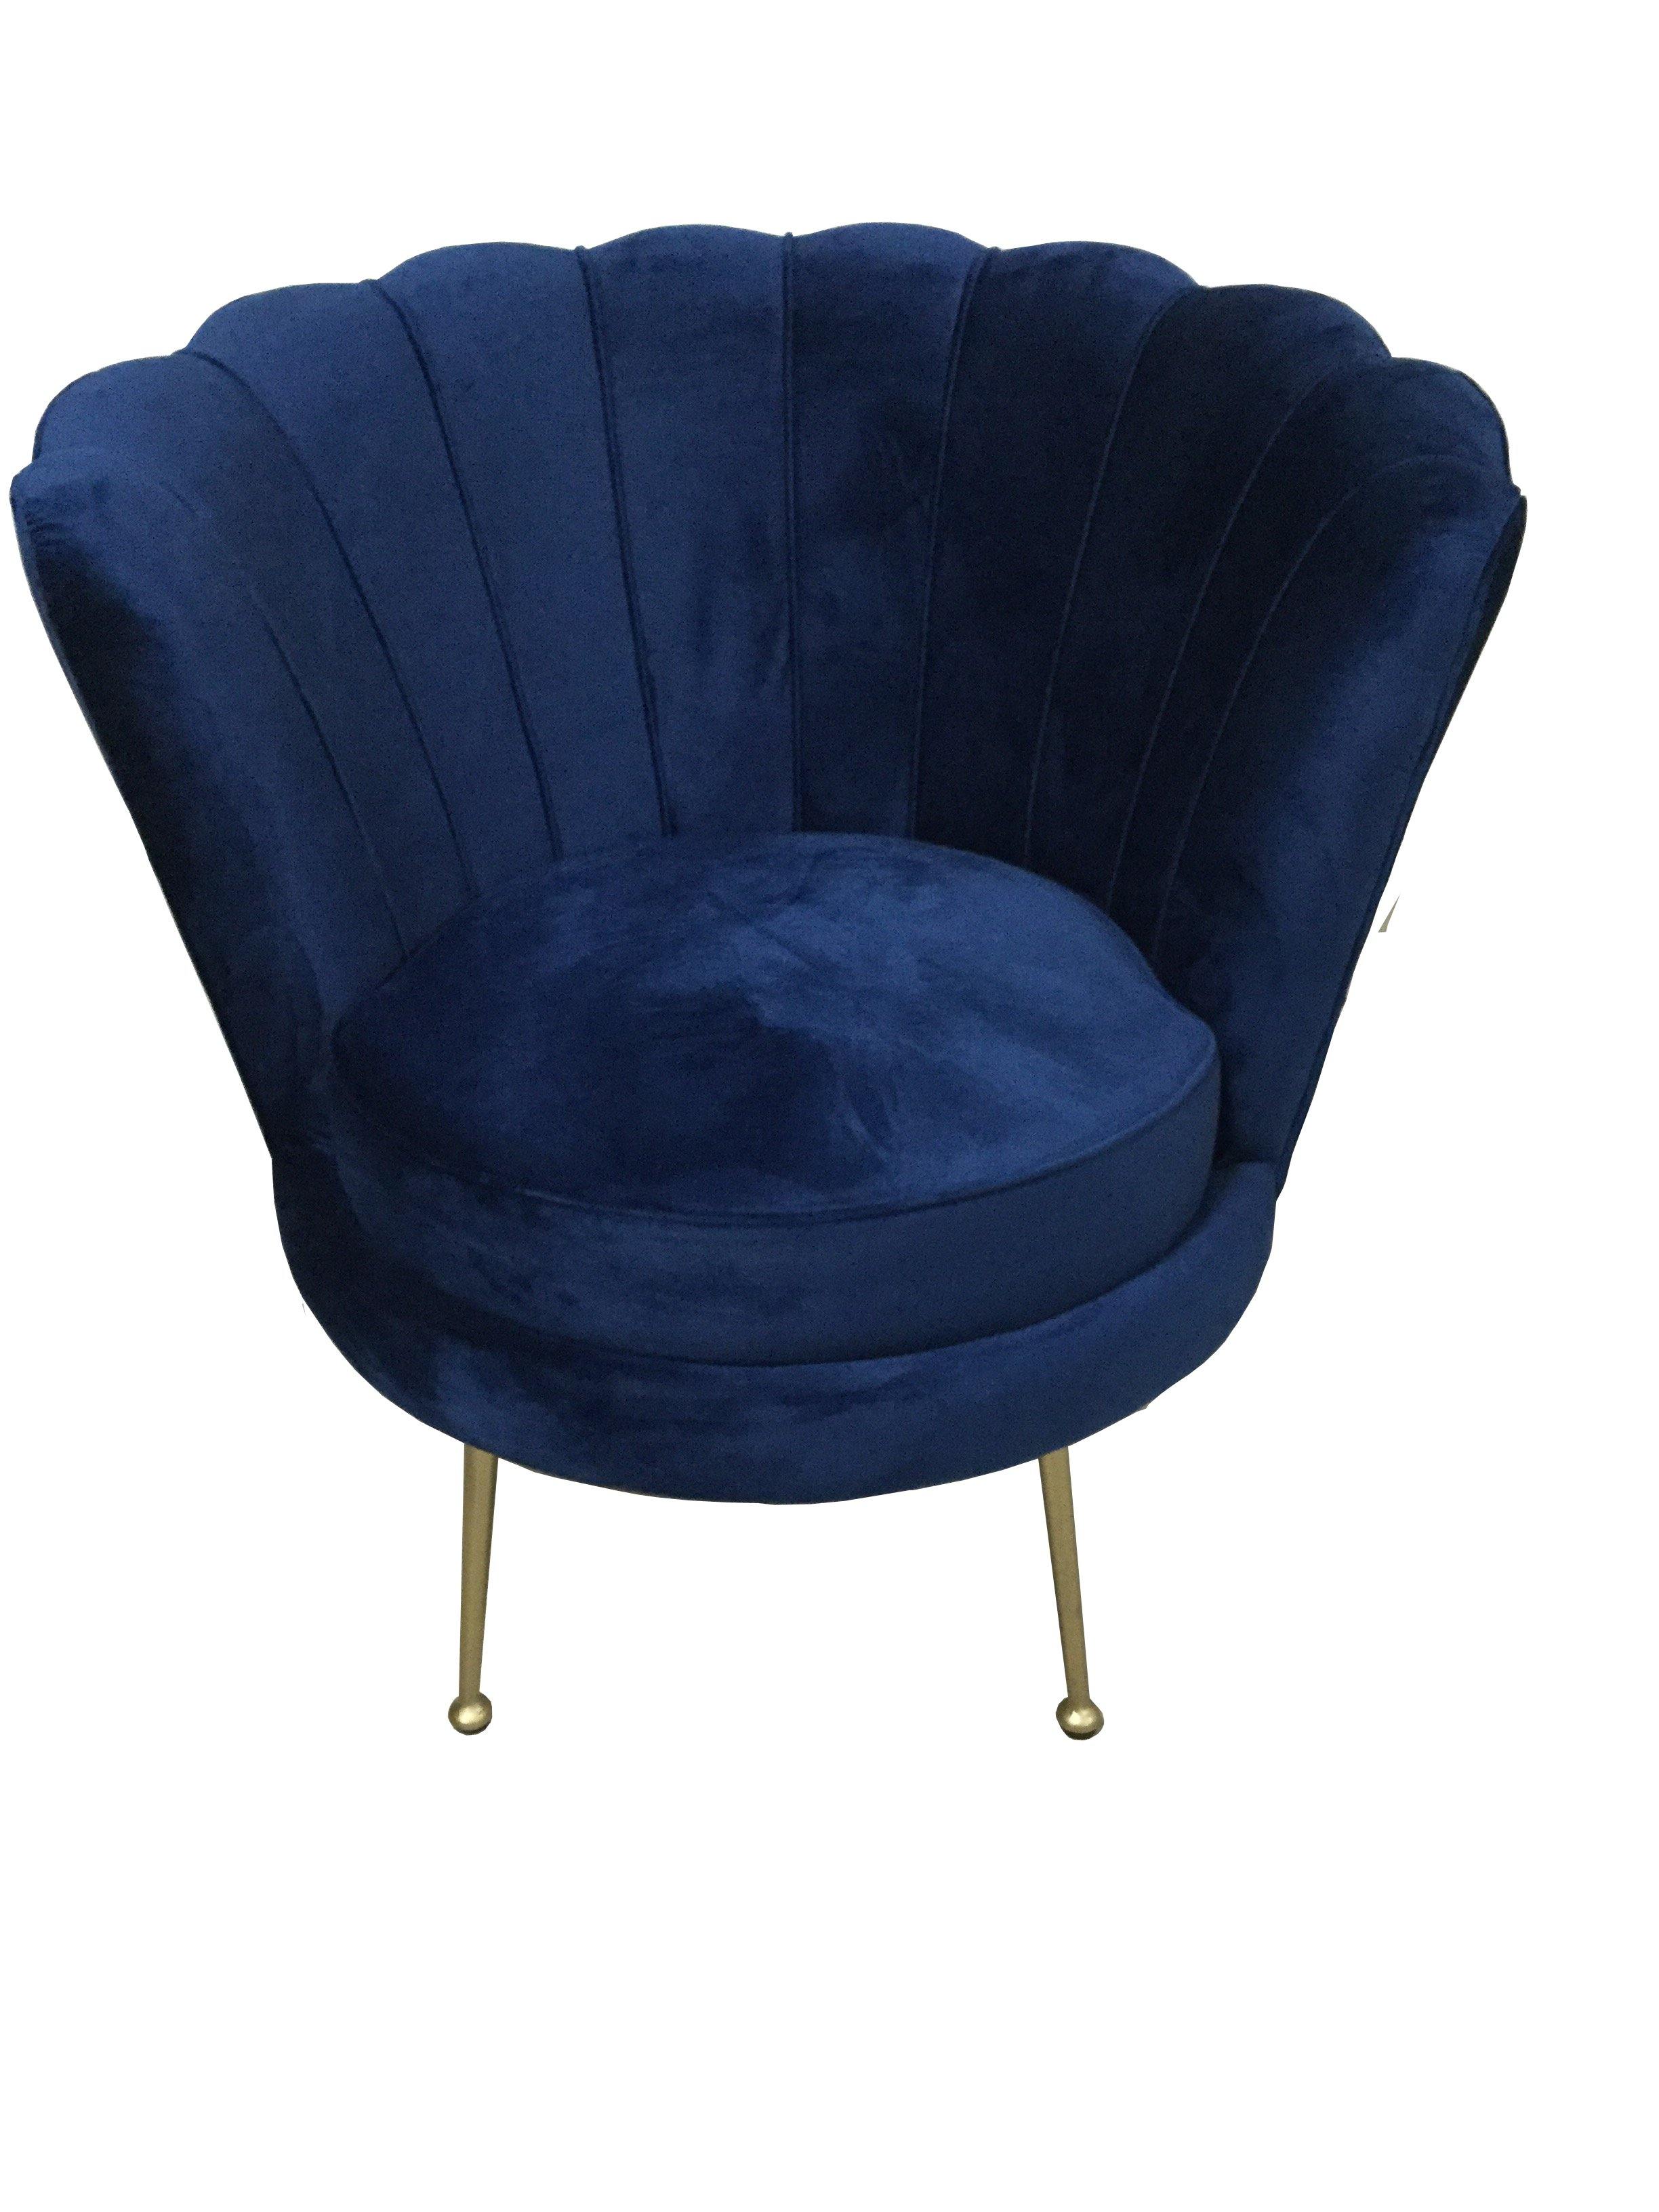 905547 Blue Accent chair By coaster - sofafair.com